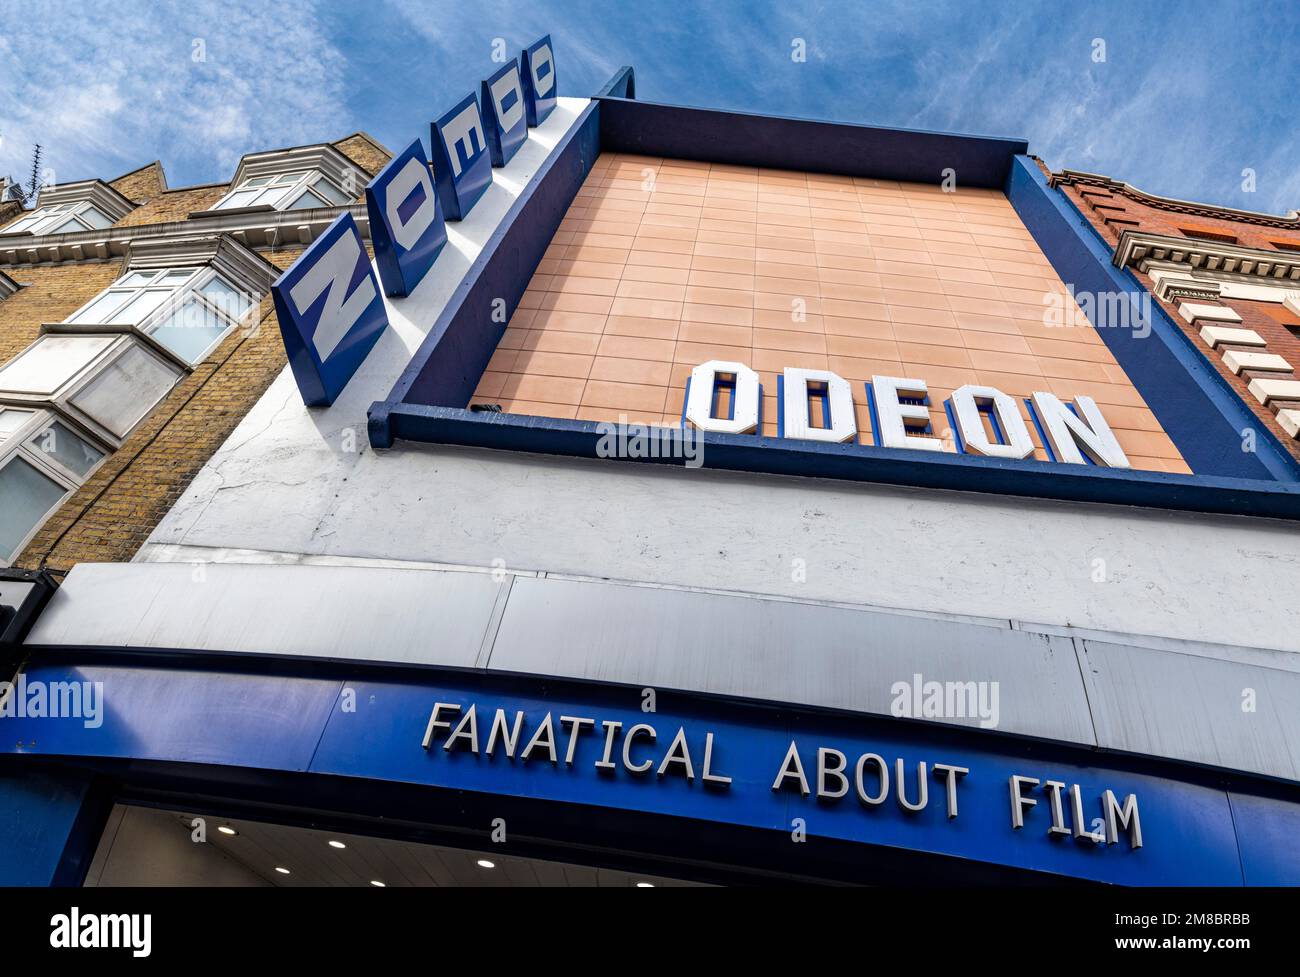 The Odeon cinema in Camden Stock Photo